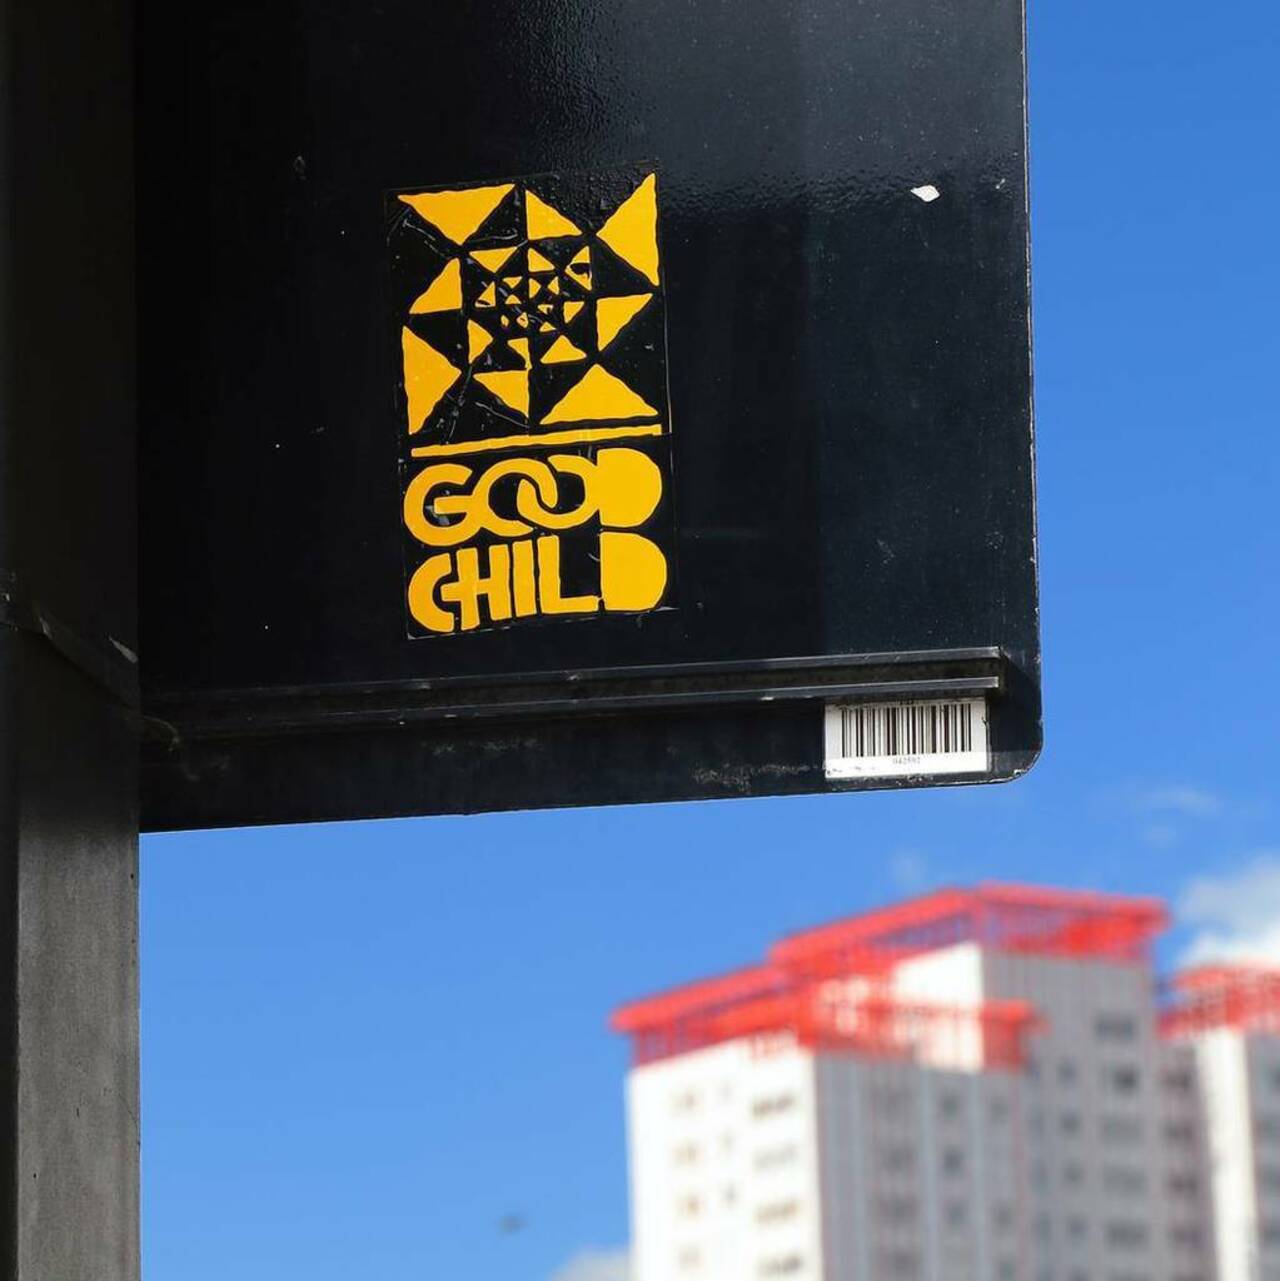 Goodchild #goodchild #graffiti #streetart #sticker #tag #streetartlondon by alexe0639 http://t.co/TiGiPXnPRg